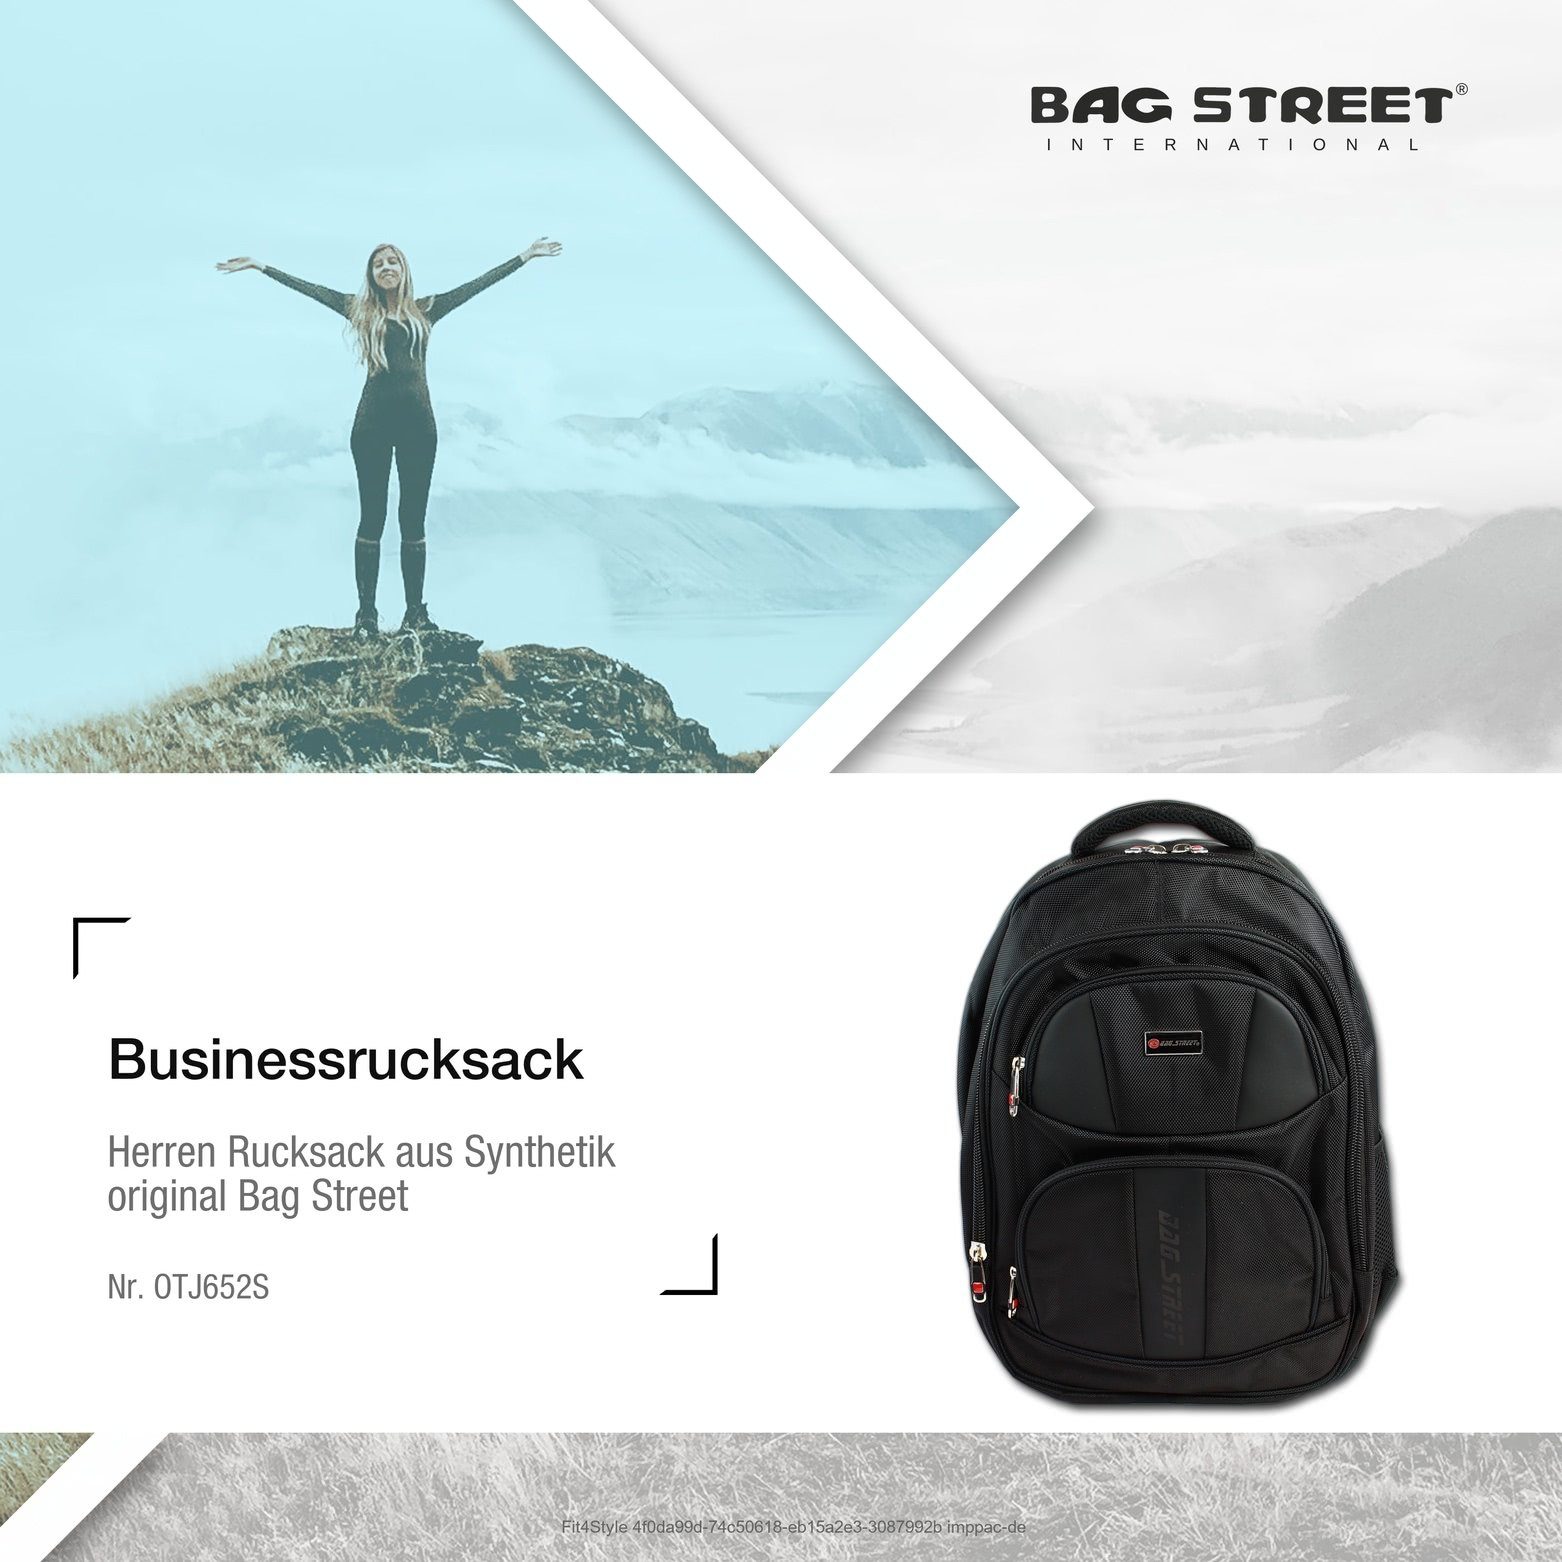 Synthetik, x 30cm Sportrucksack Rucksack Bag (Businessrucksack), Street ca. ca. schwarz 46cm BAG STREET Synthetik Businessrucksack schwarz